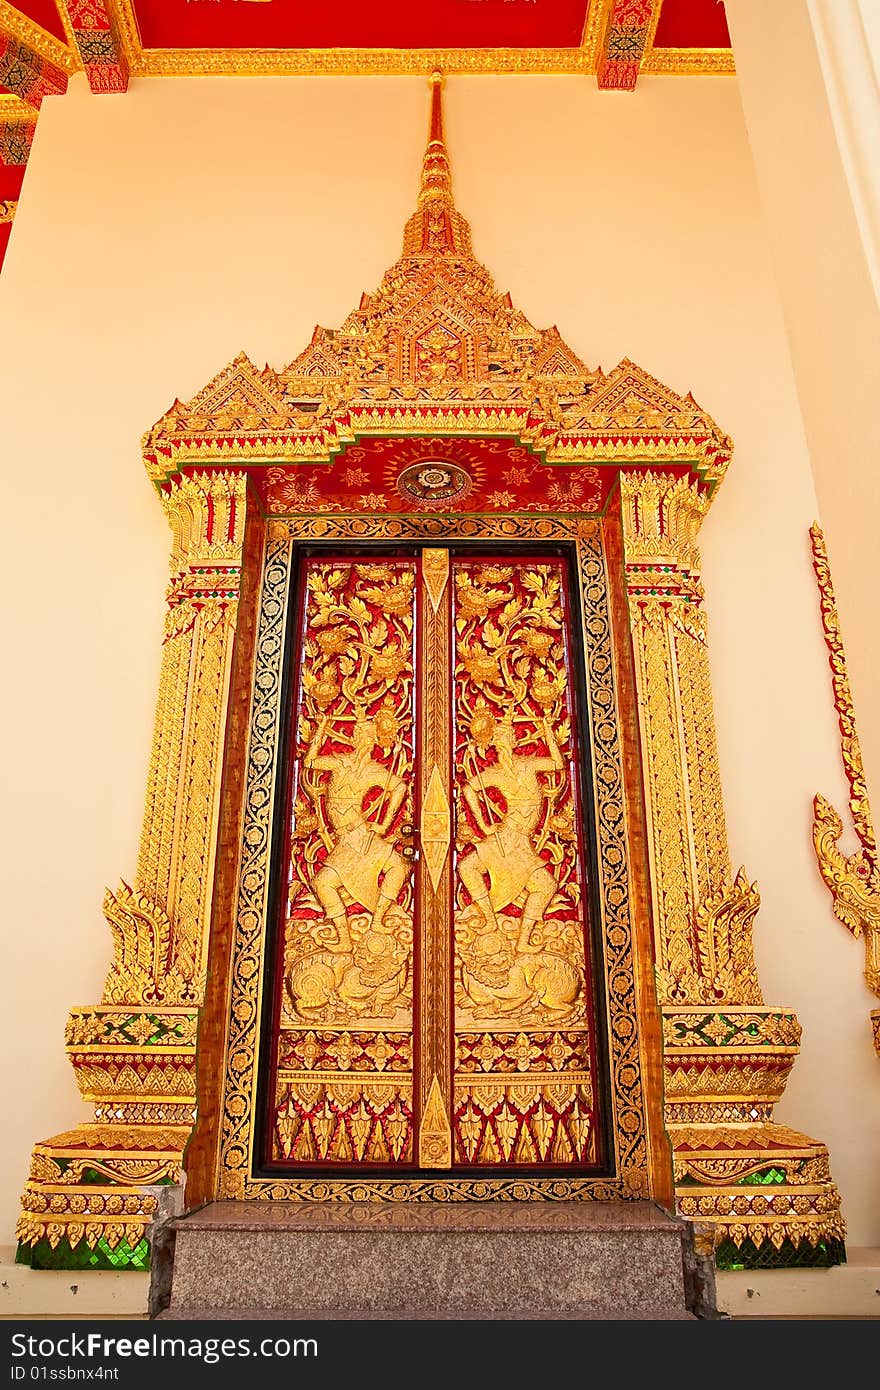 Decoration of Buddhist church window in Thai style. Decoration of Buddhist church window in Thai style